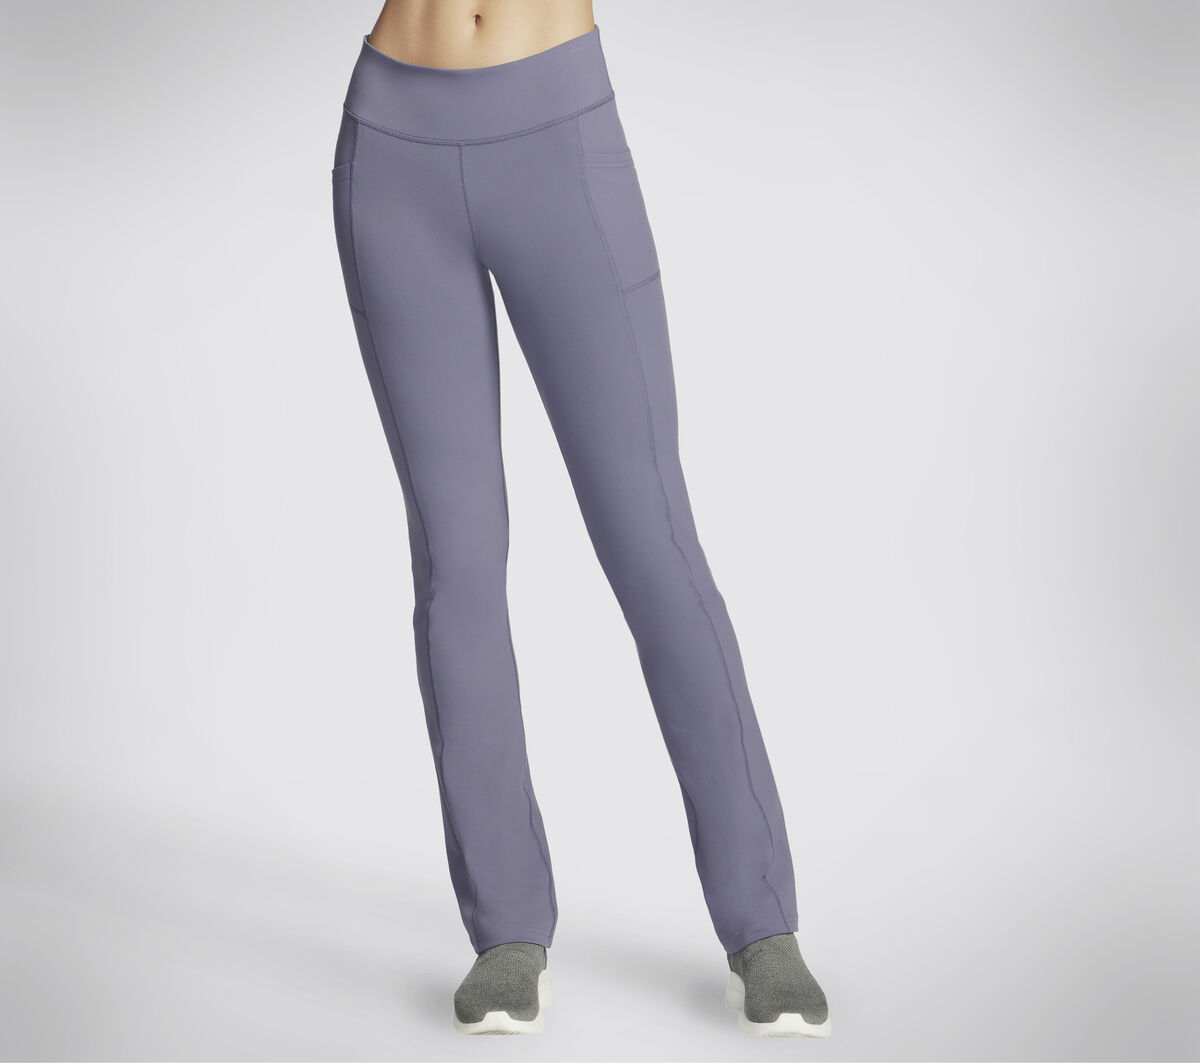 Skechers Women's Purple High Waisted GoWalk Pants Size Variations